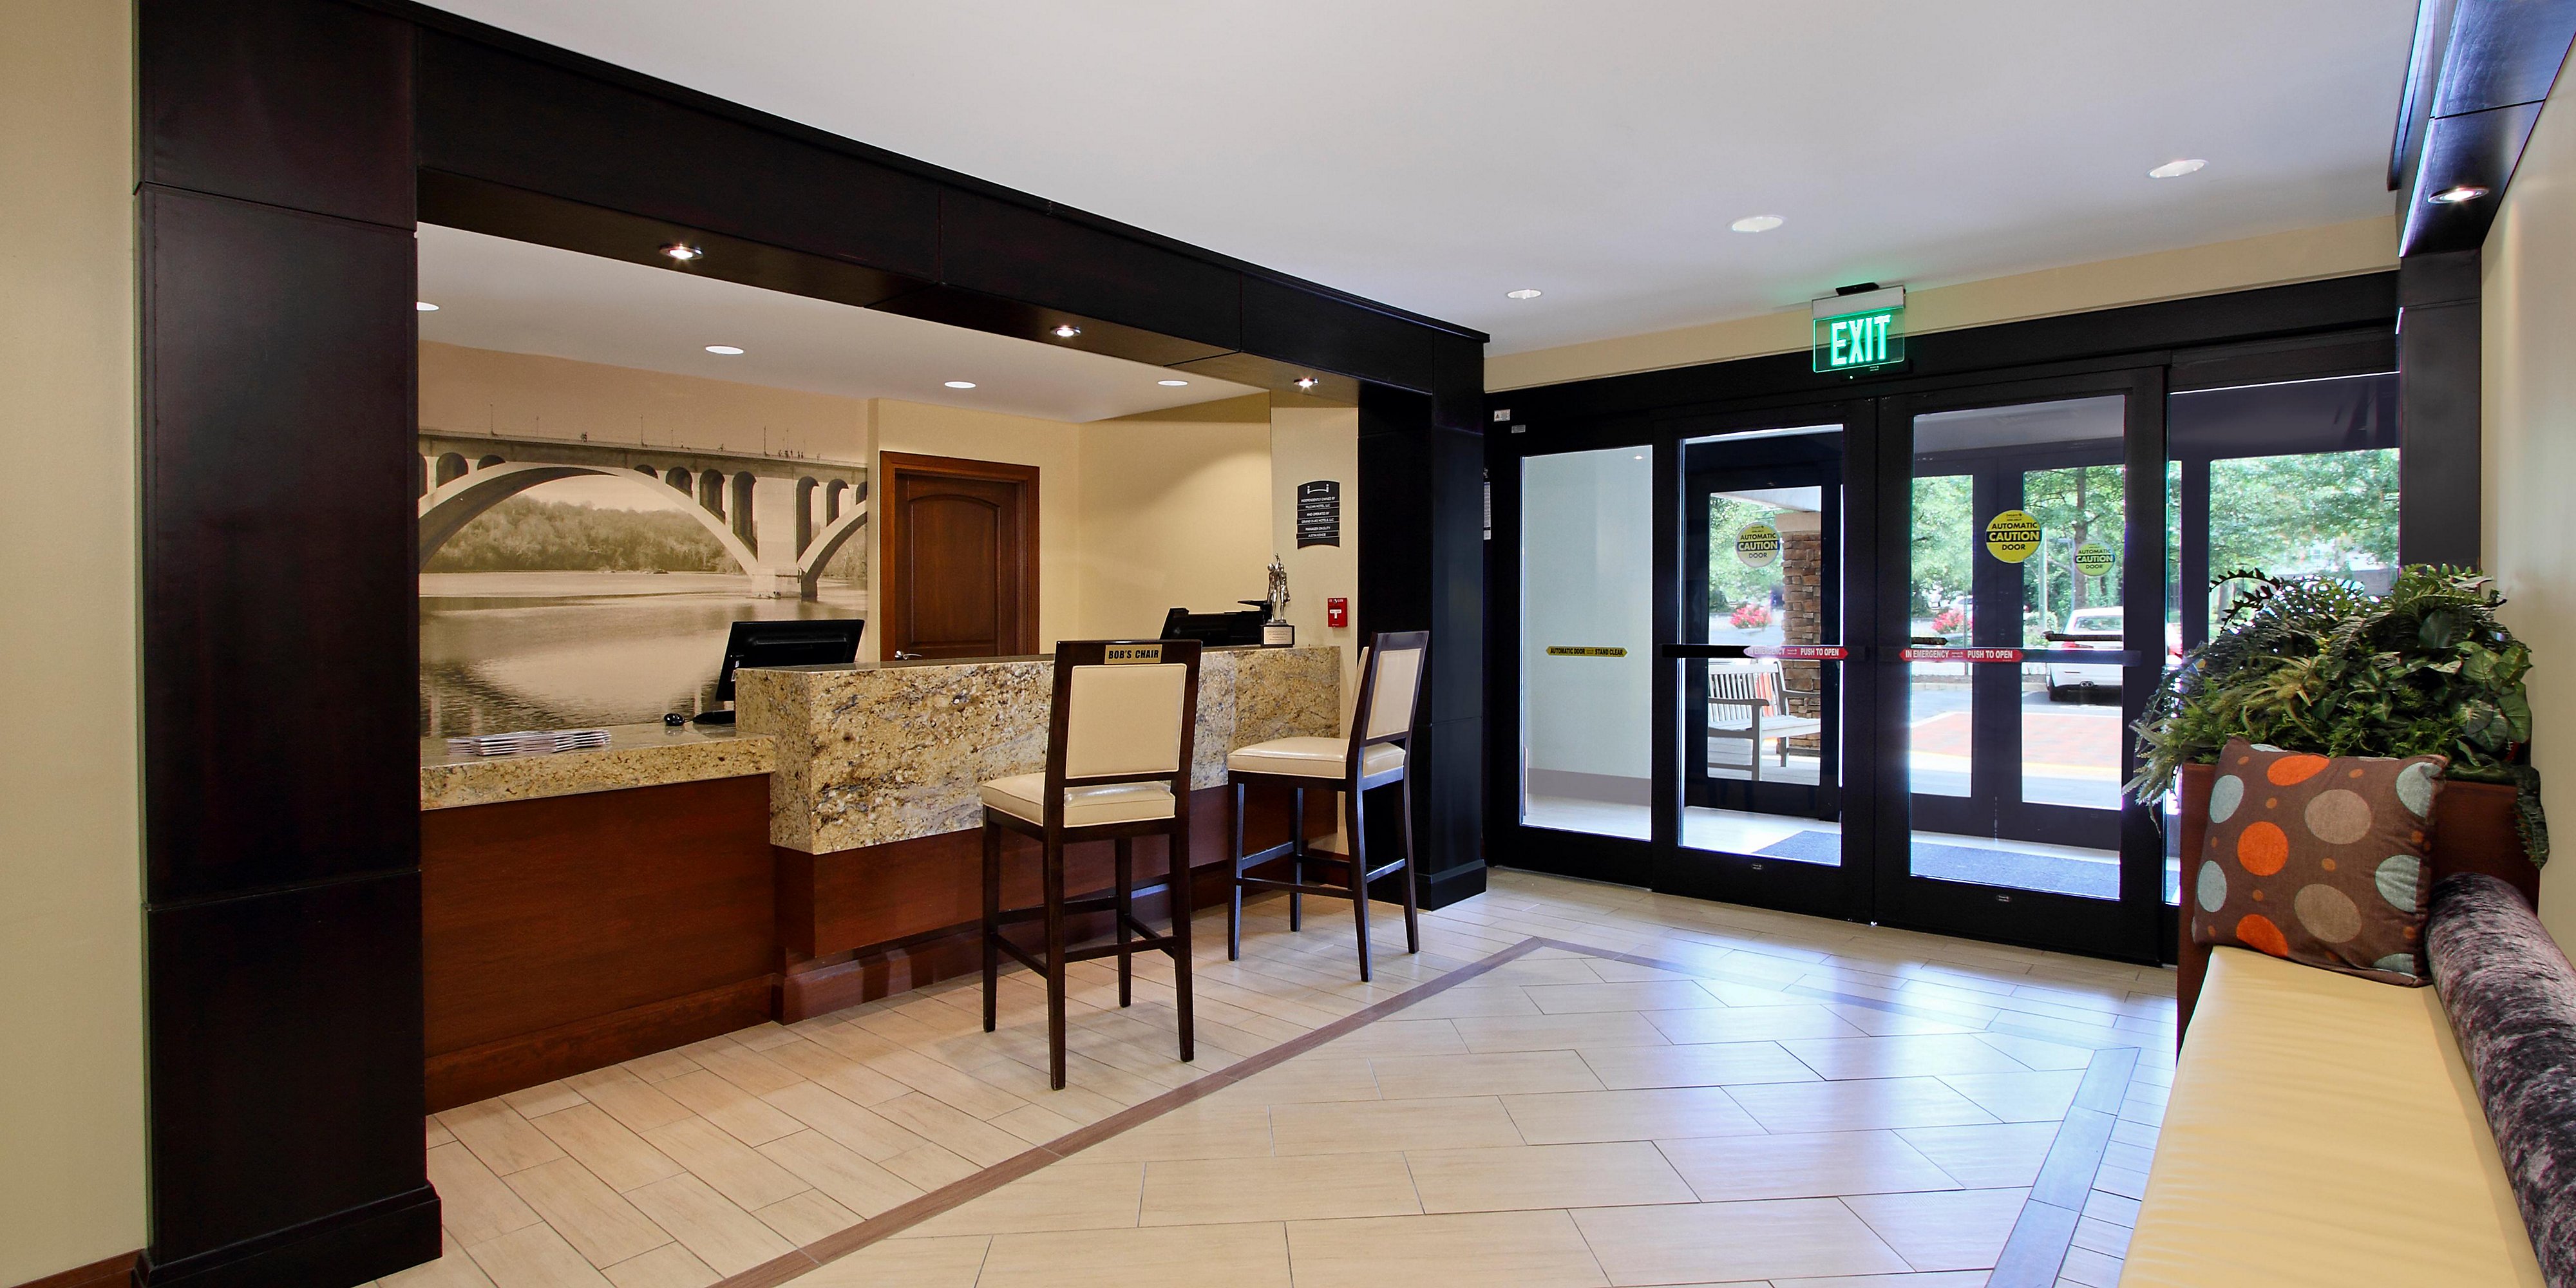 Extended Stay Hotels In Mclean Va Staybridge Suites - 